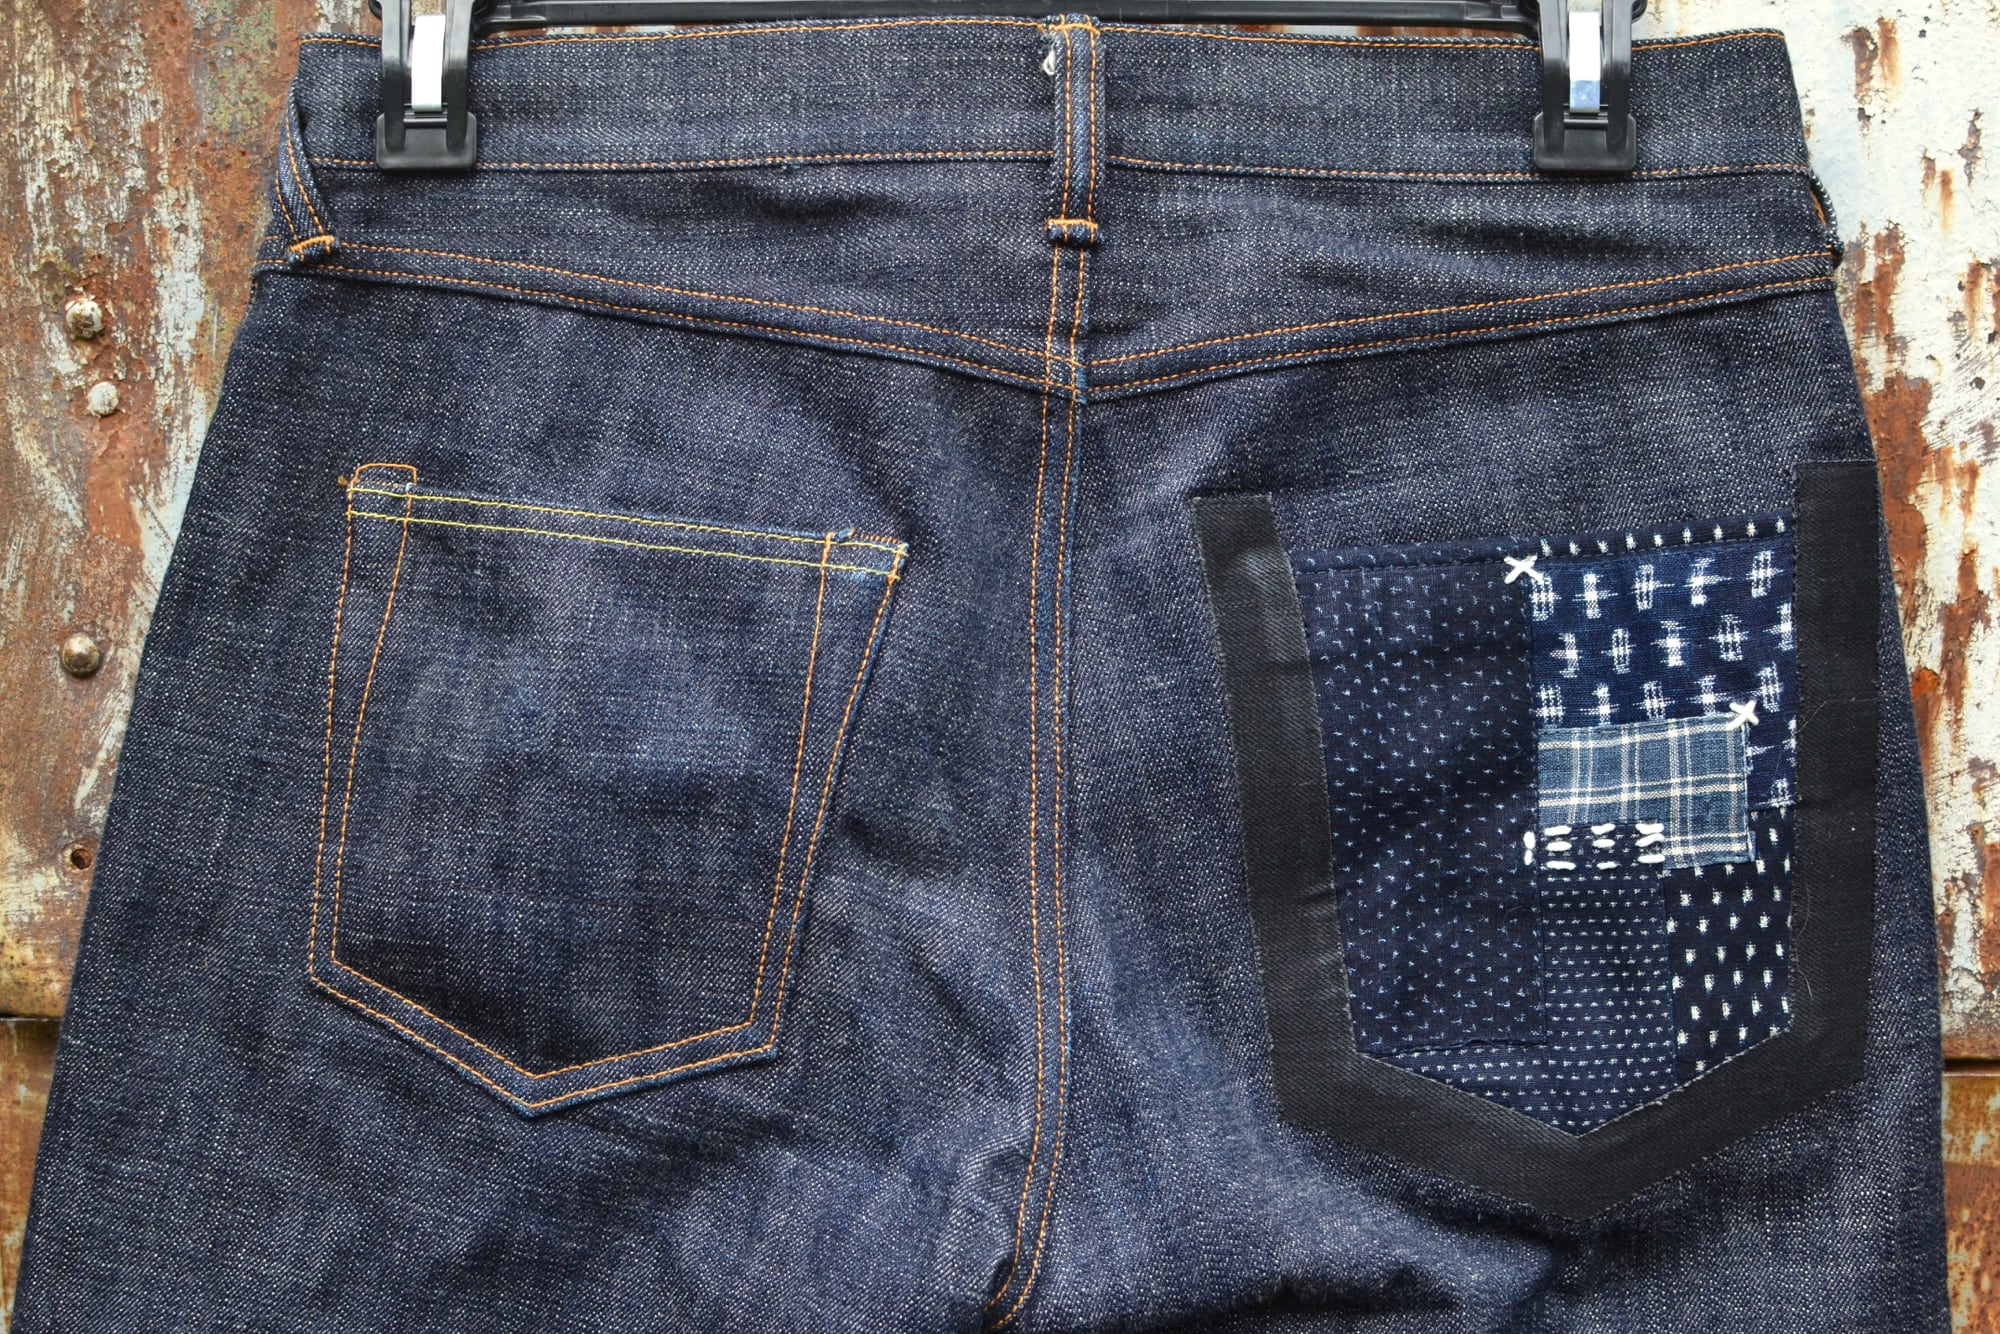 PHI DENIM PHI04 16oz jeans raw selvedge MADE IN JAPAN jeans Pocket made with kimono offcuts, Tsugihagi つぎはぎ